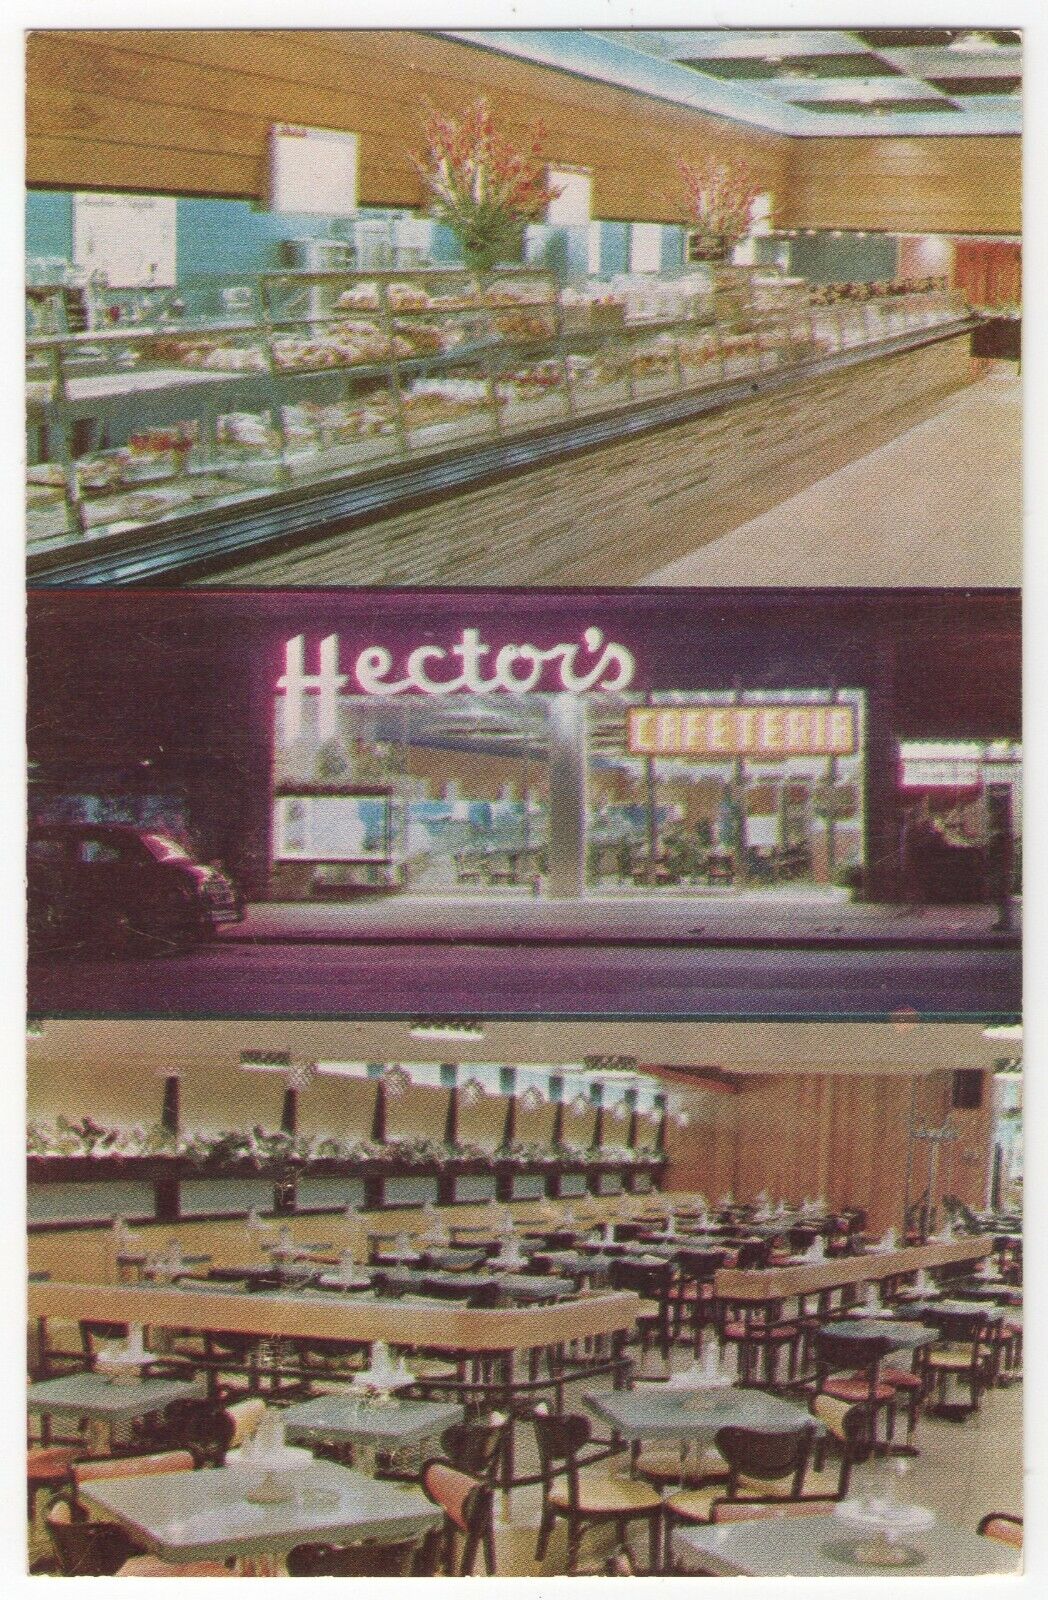 Hectors Self-Service Buffet Restaurant & Dining New York City NY Chrome Postcard